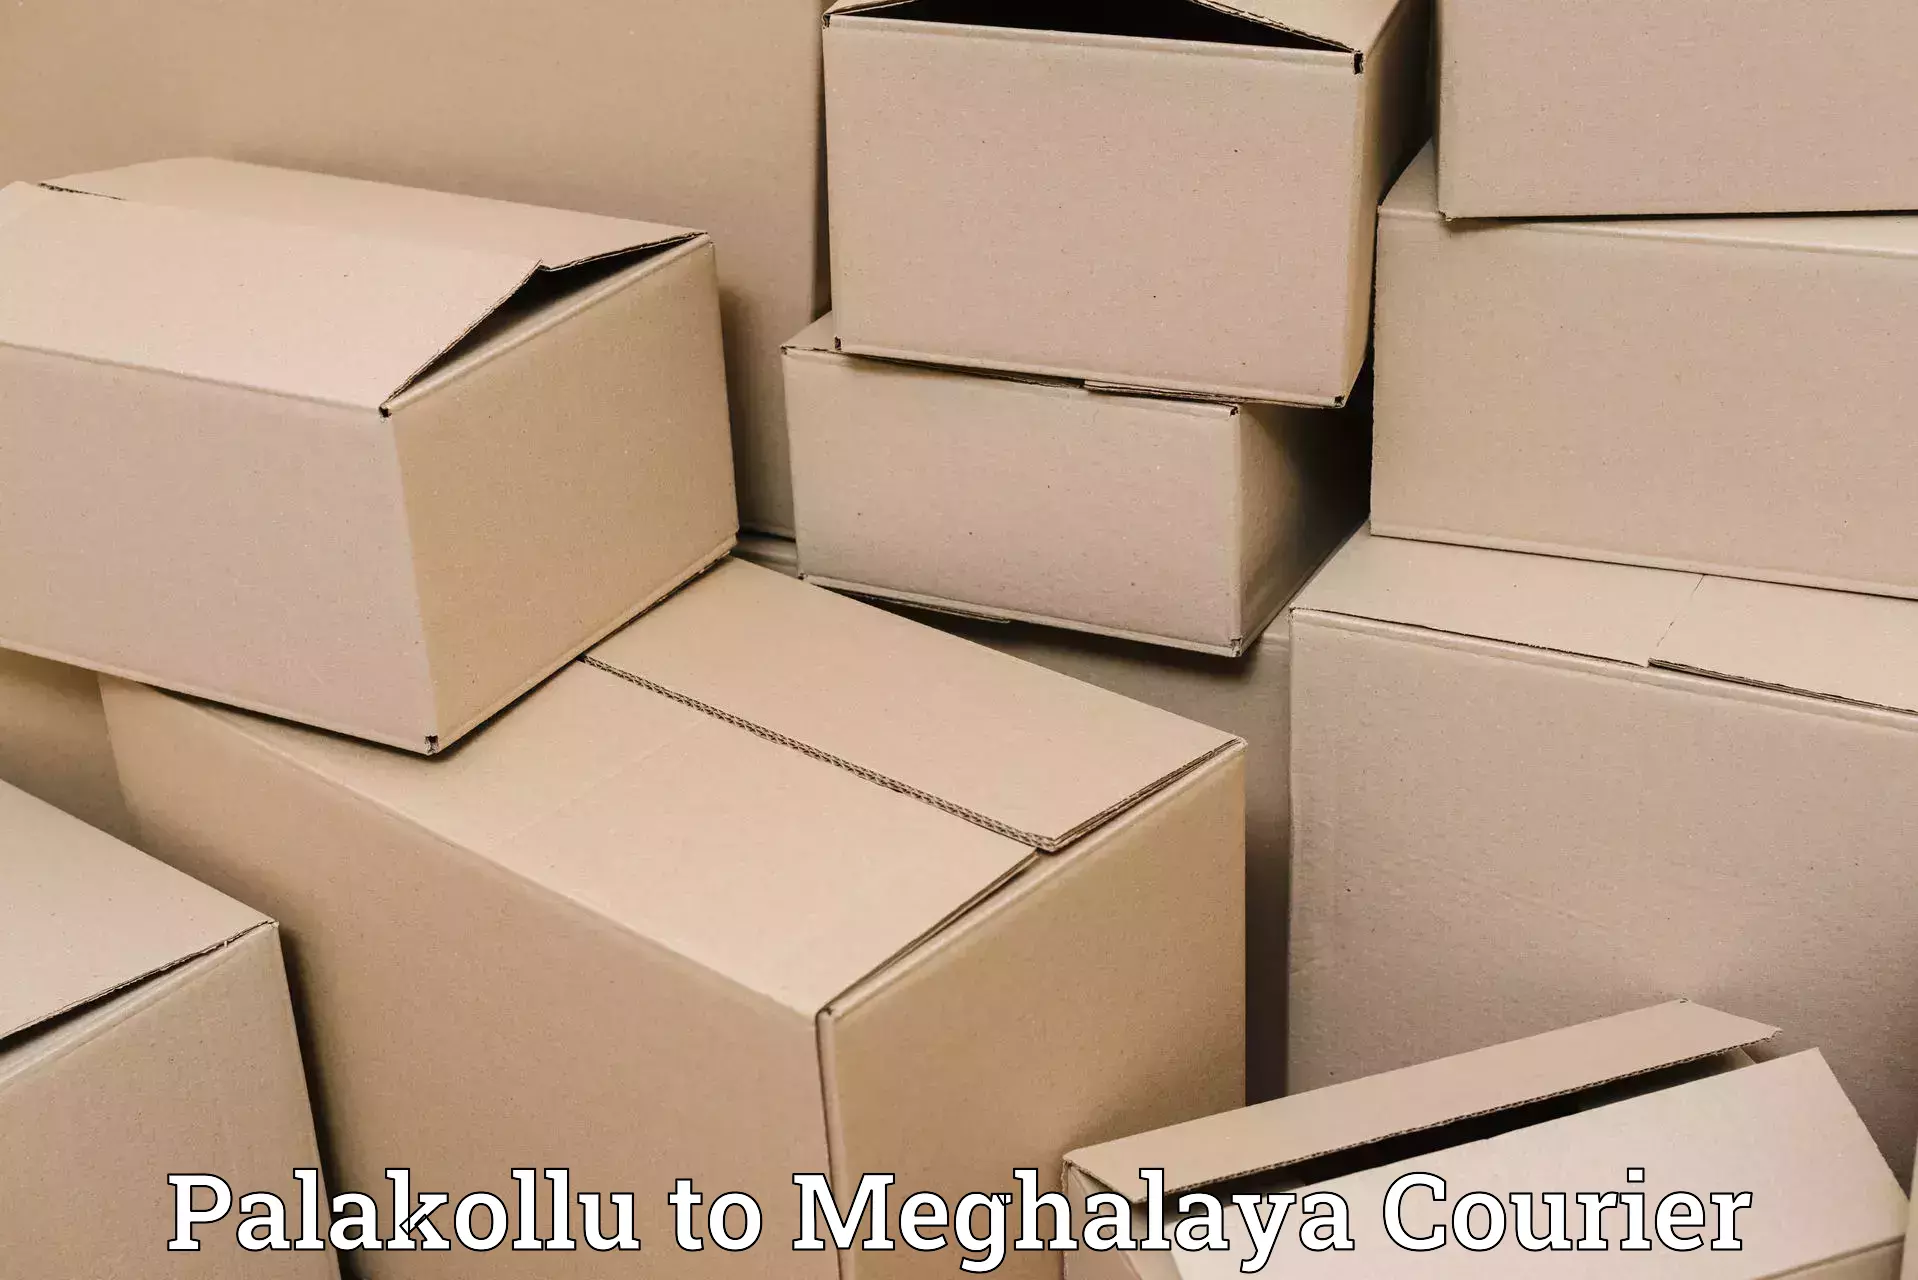 Courier service booking Palakollu to Jowai